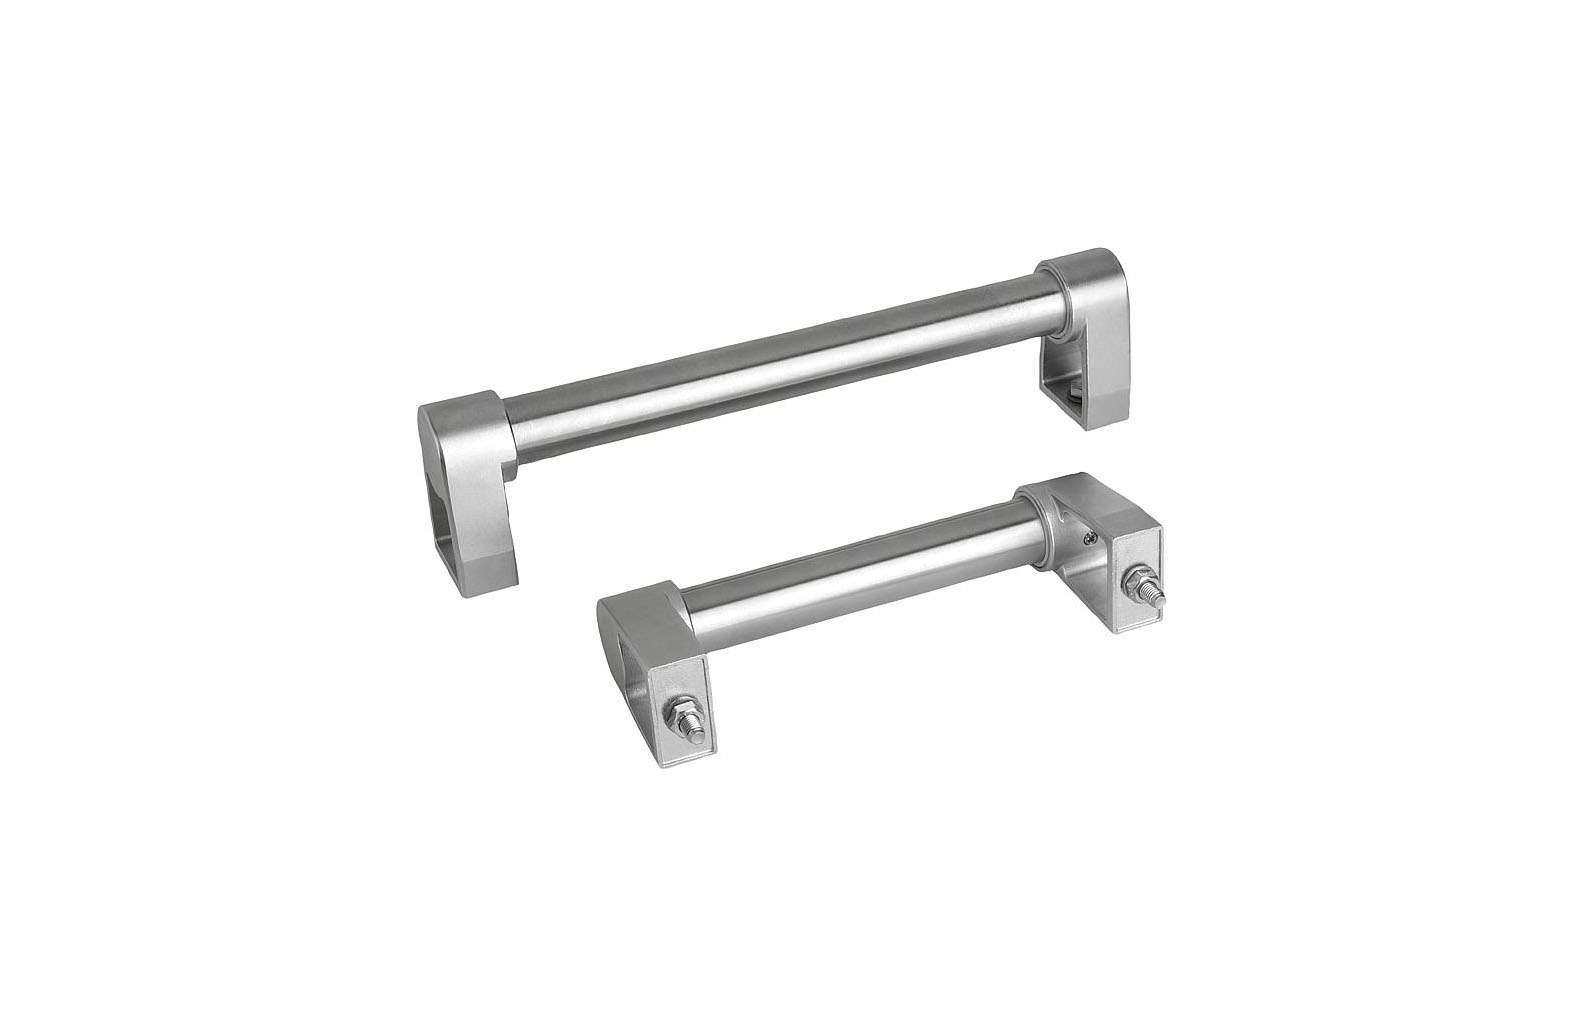 K0652_Pull Handles stainless steel, three-piece tube design, metric